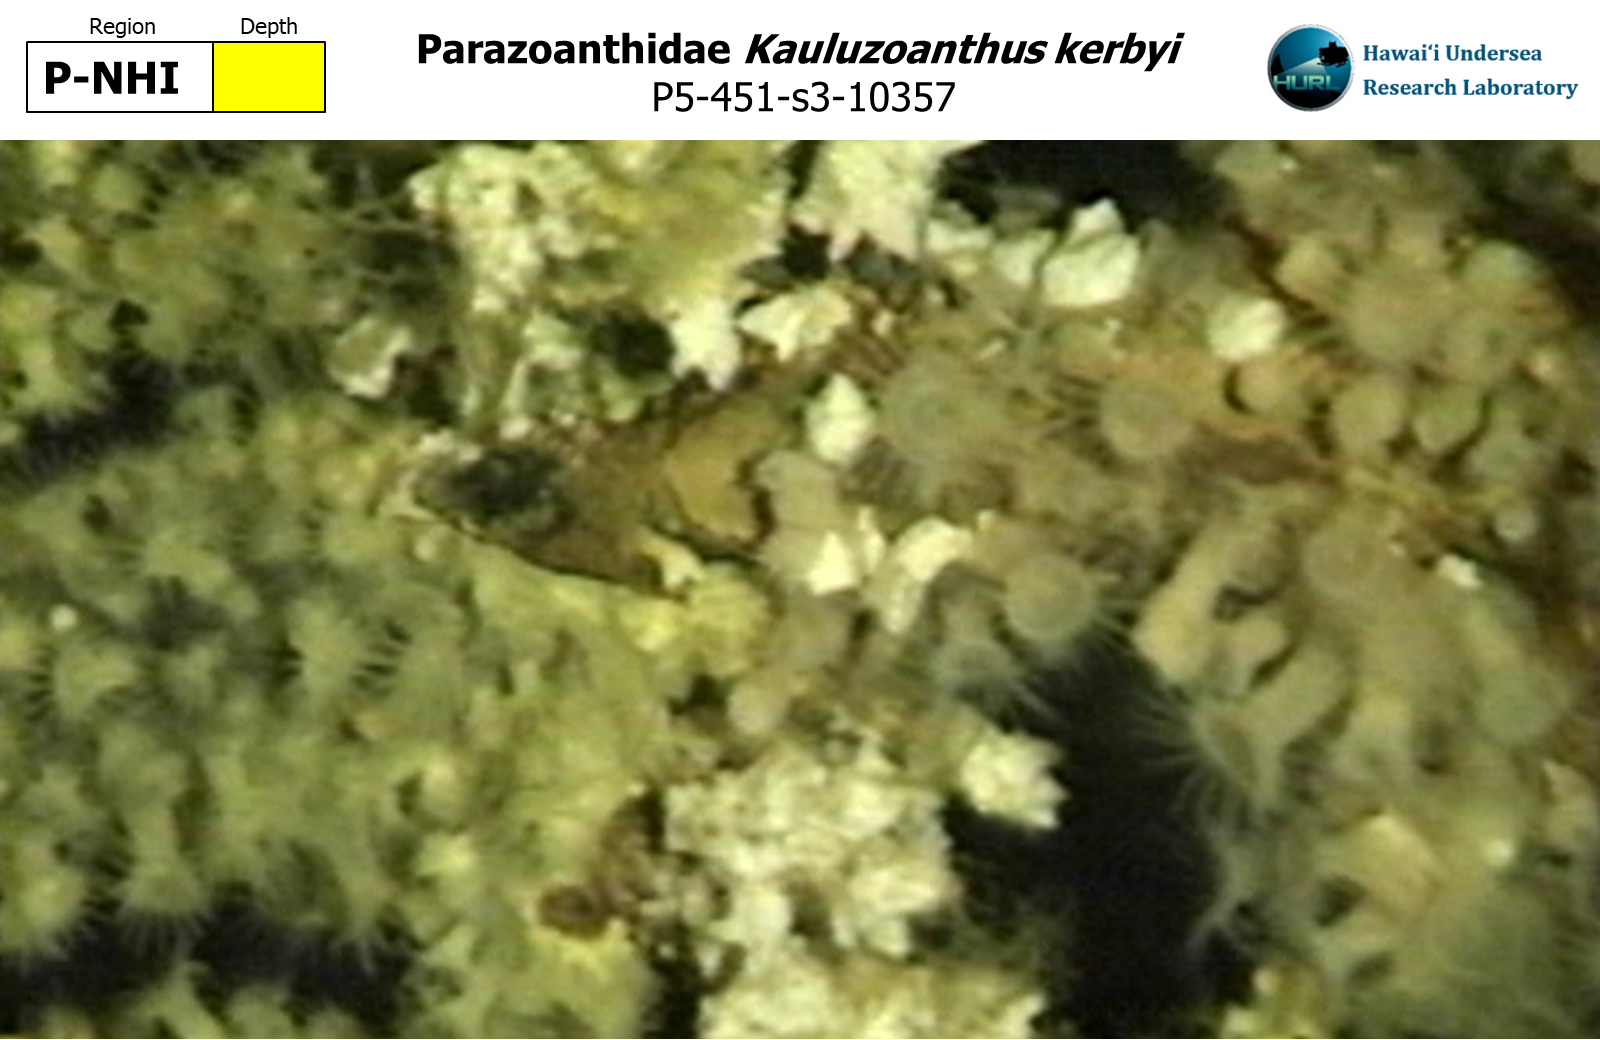 Kauluzoanthus kerbyi,P5-451-s3-10357,P-NHI,Y,P5-451